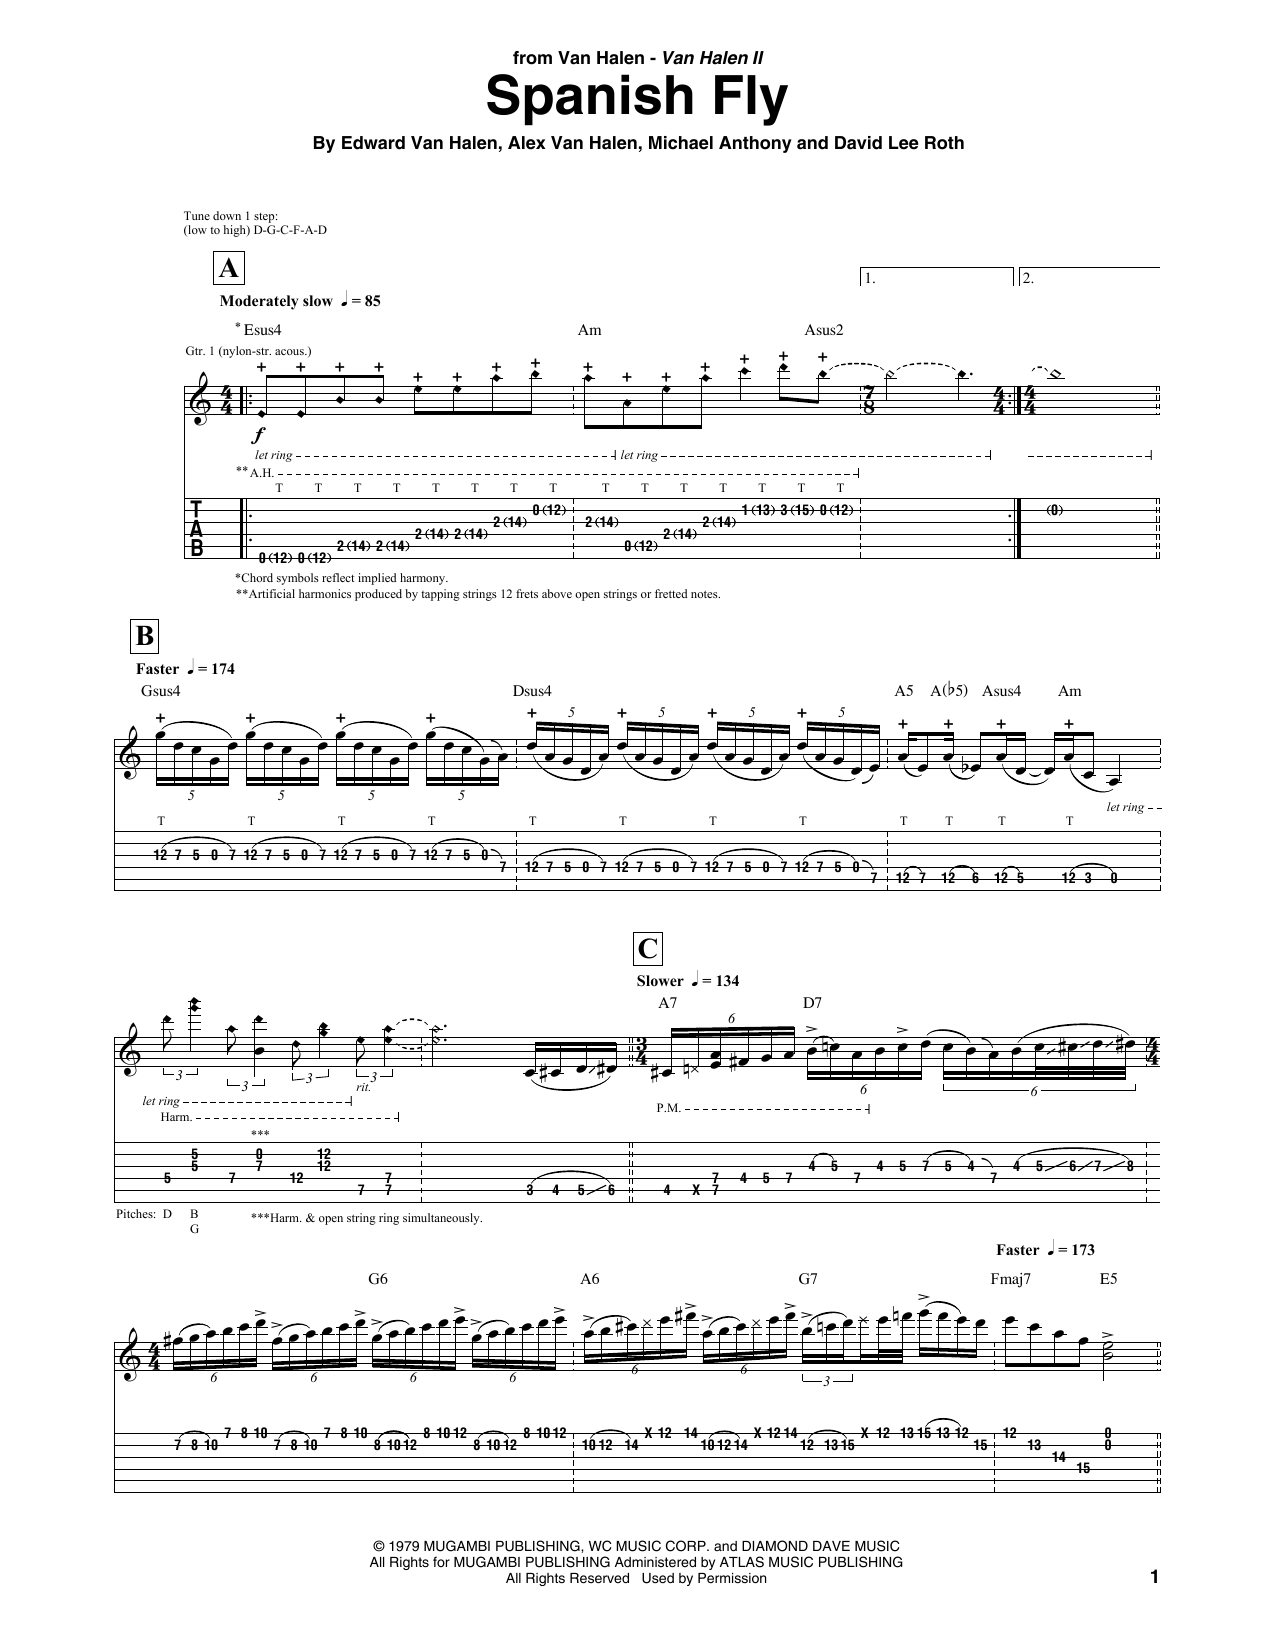 Van Halen Spanish Fly Sheet Music Notes & Chords for Guitar Tab - Download or Print PDF